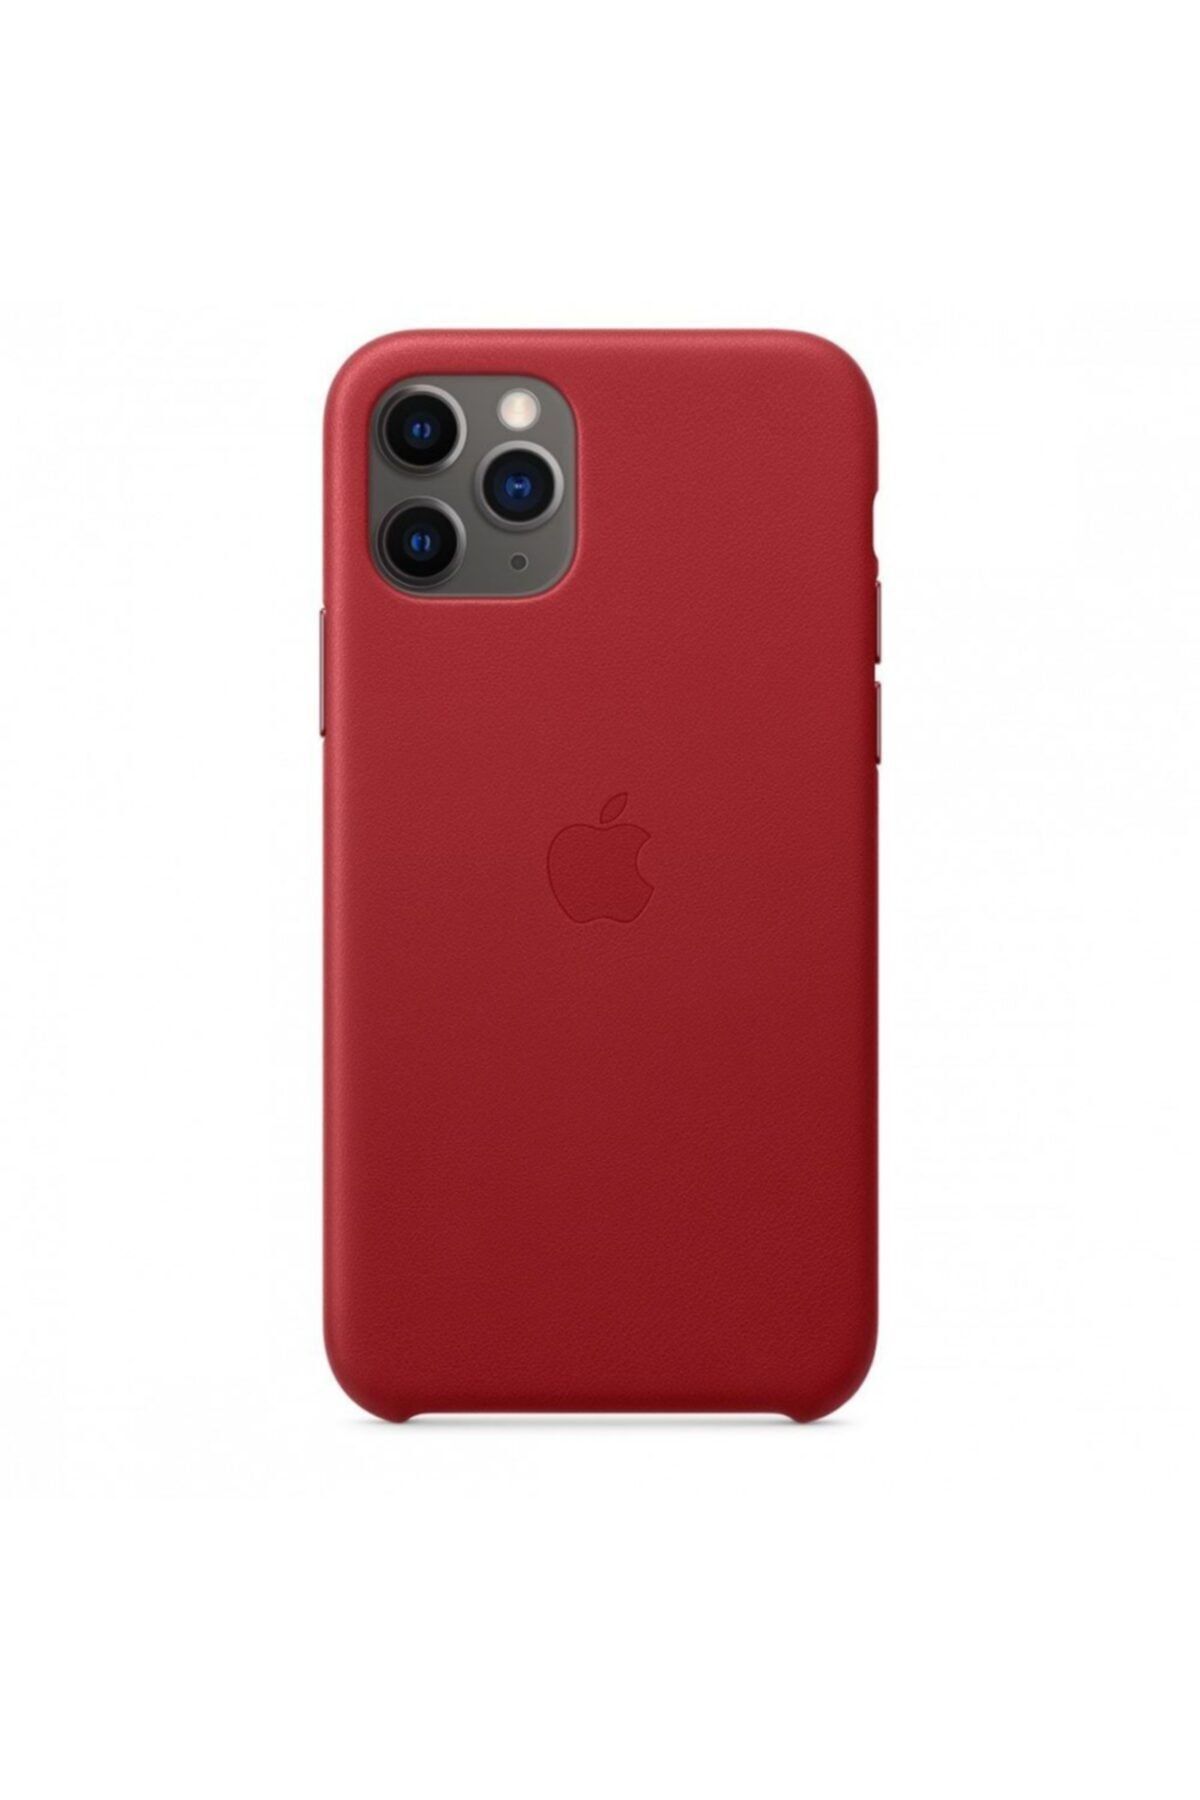 Apple Mwyf2zm/a Iphone 11 Pro Derı Kılıf Product Red